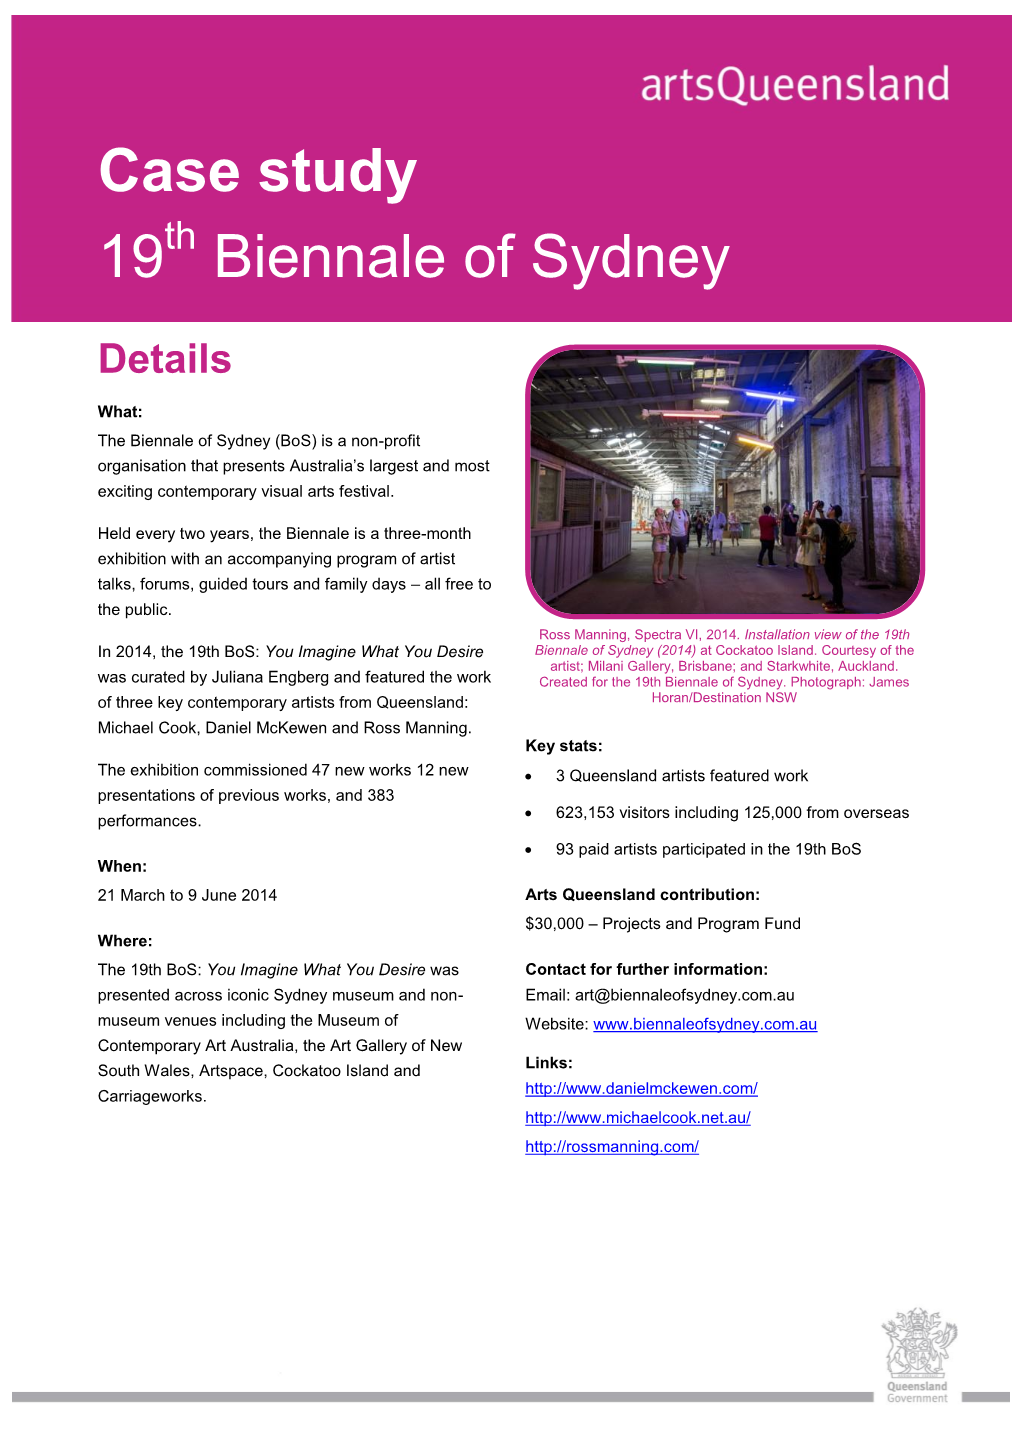 Case Study 19 Biennale of Sydney